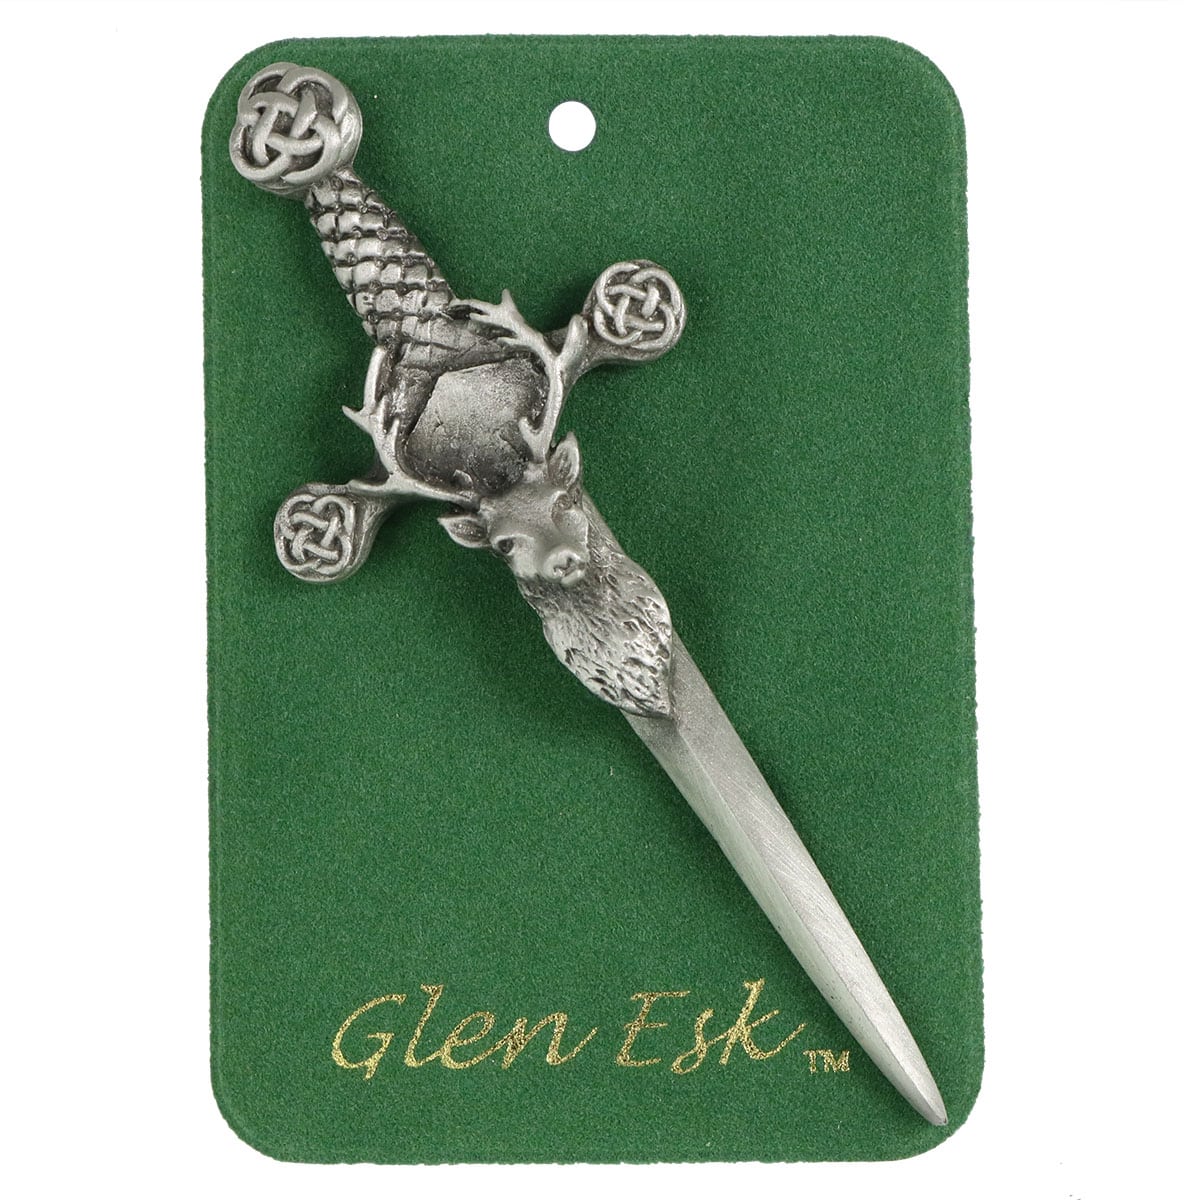 Glen esk celtic knife with a Stag's Head Kilt Pin.